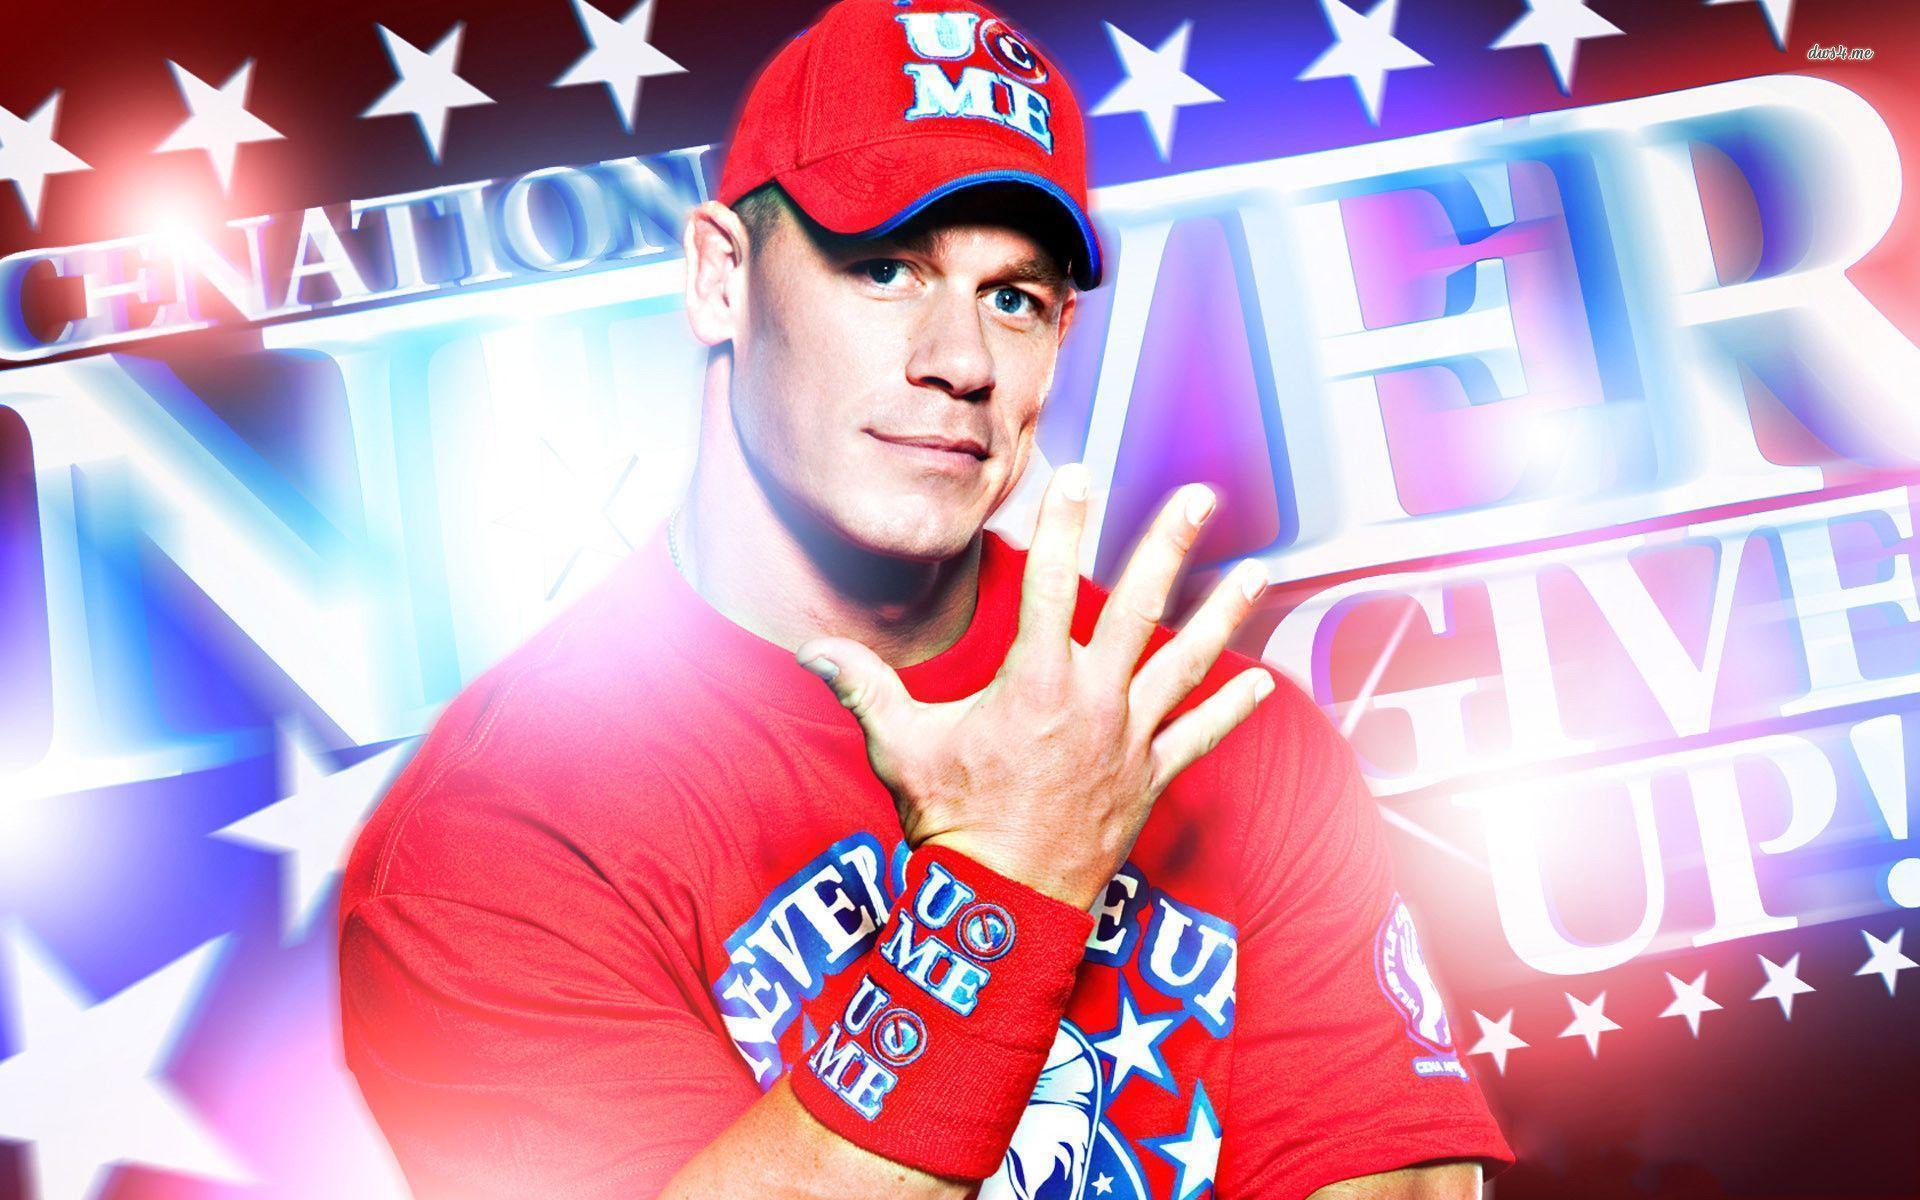 WWE John Cena Wallpaper 3 1530 HD Wallpaper. Wallroro